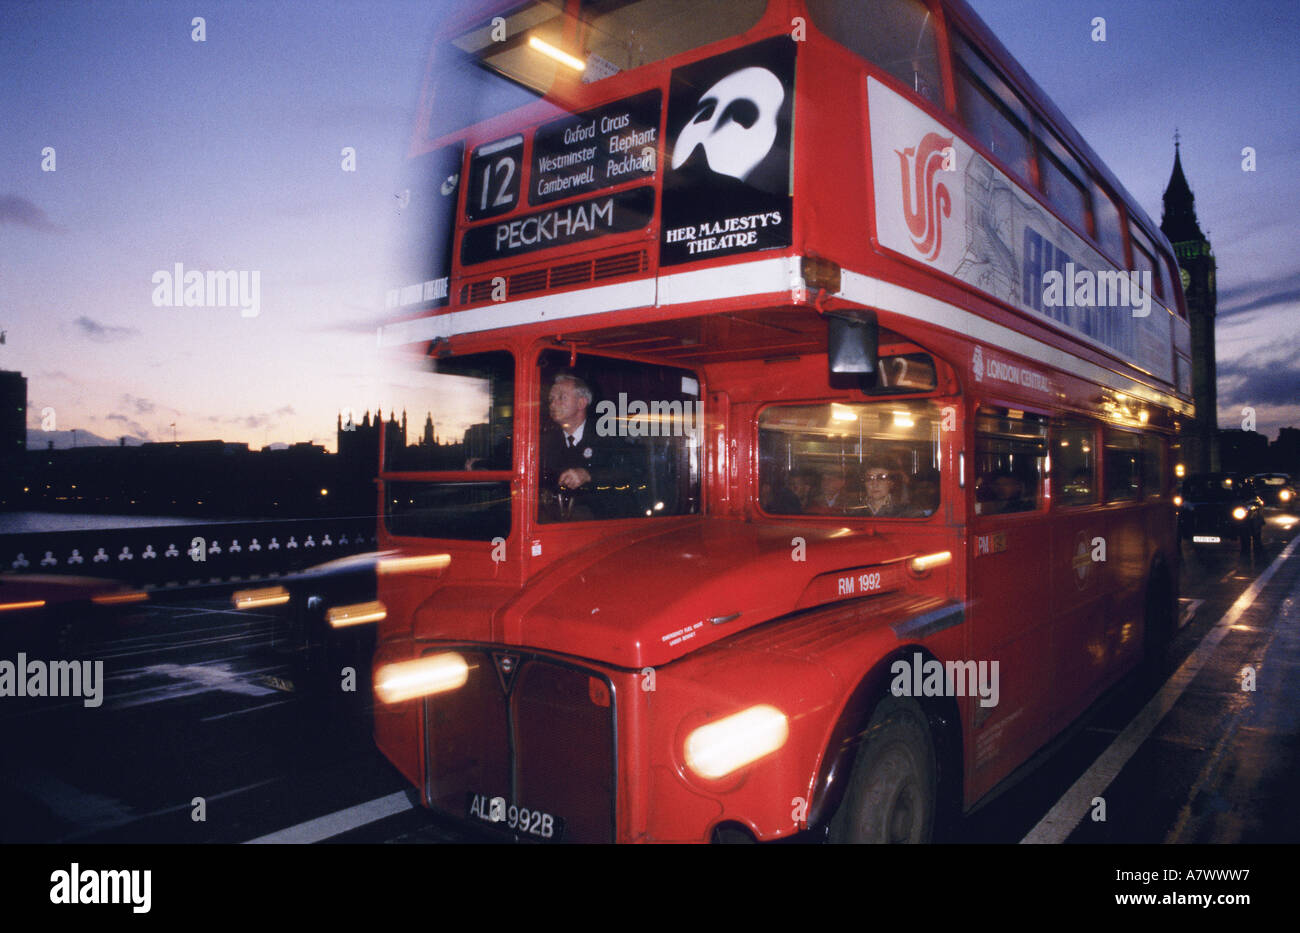 United Kingdom, London, londoner bus on Westminster bridge Stock Photo